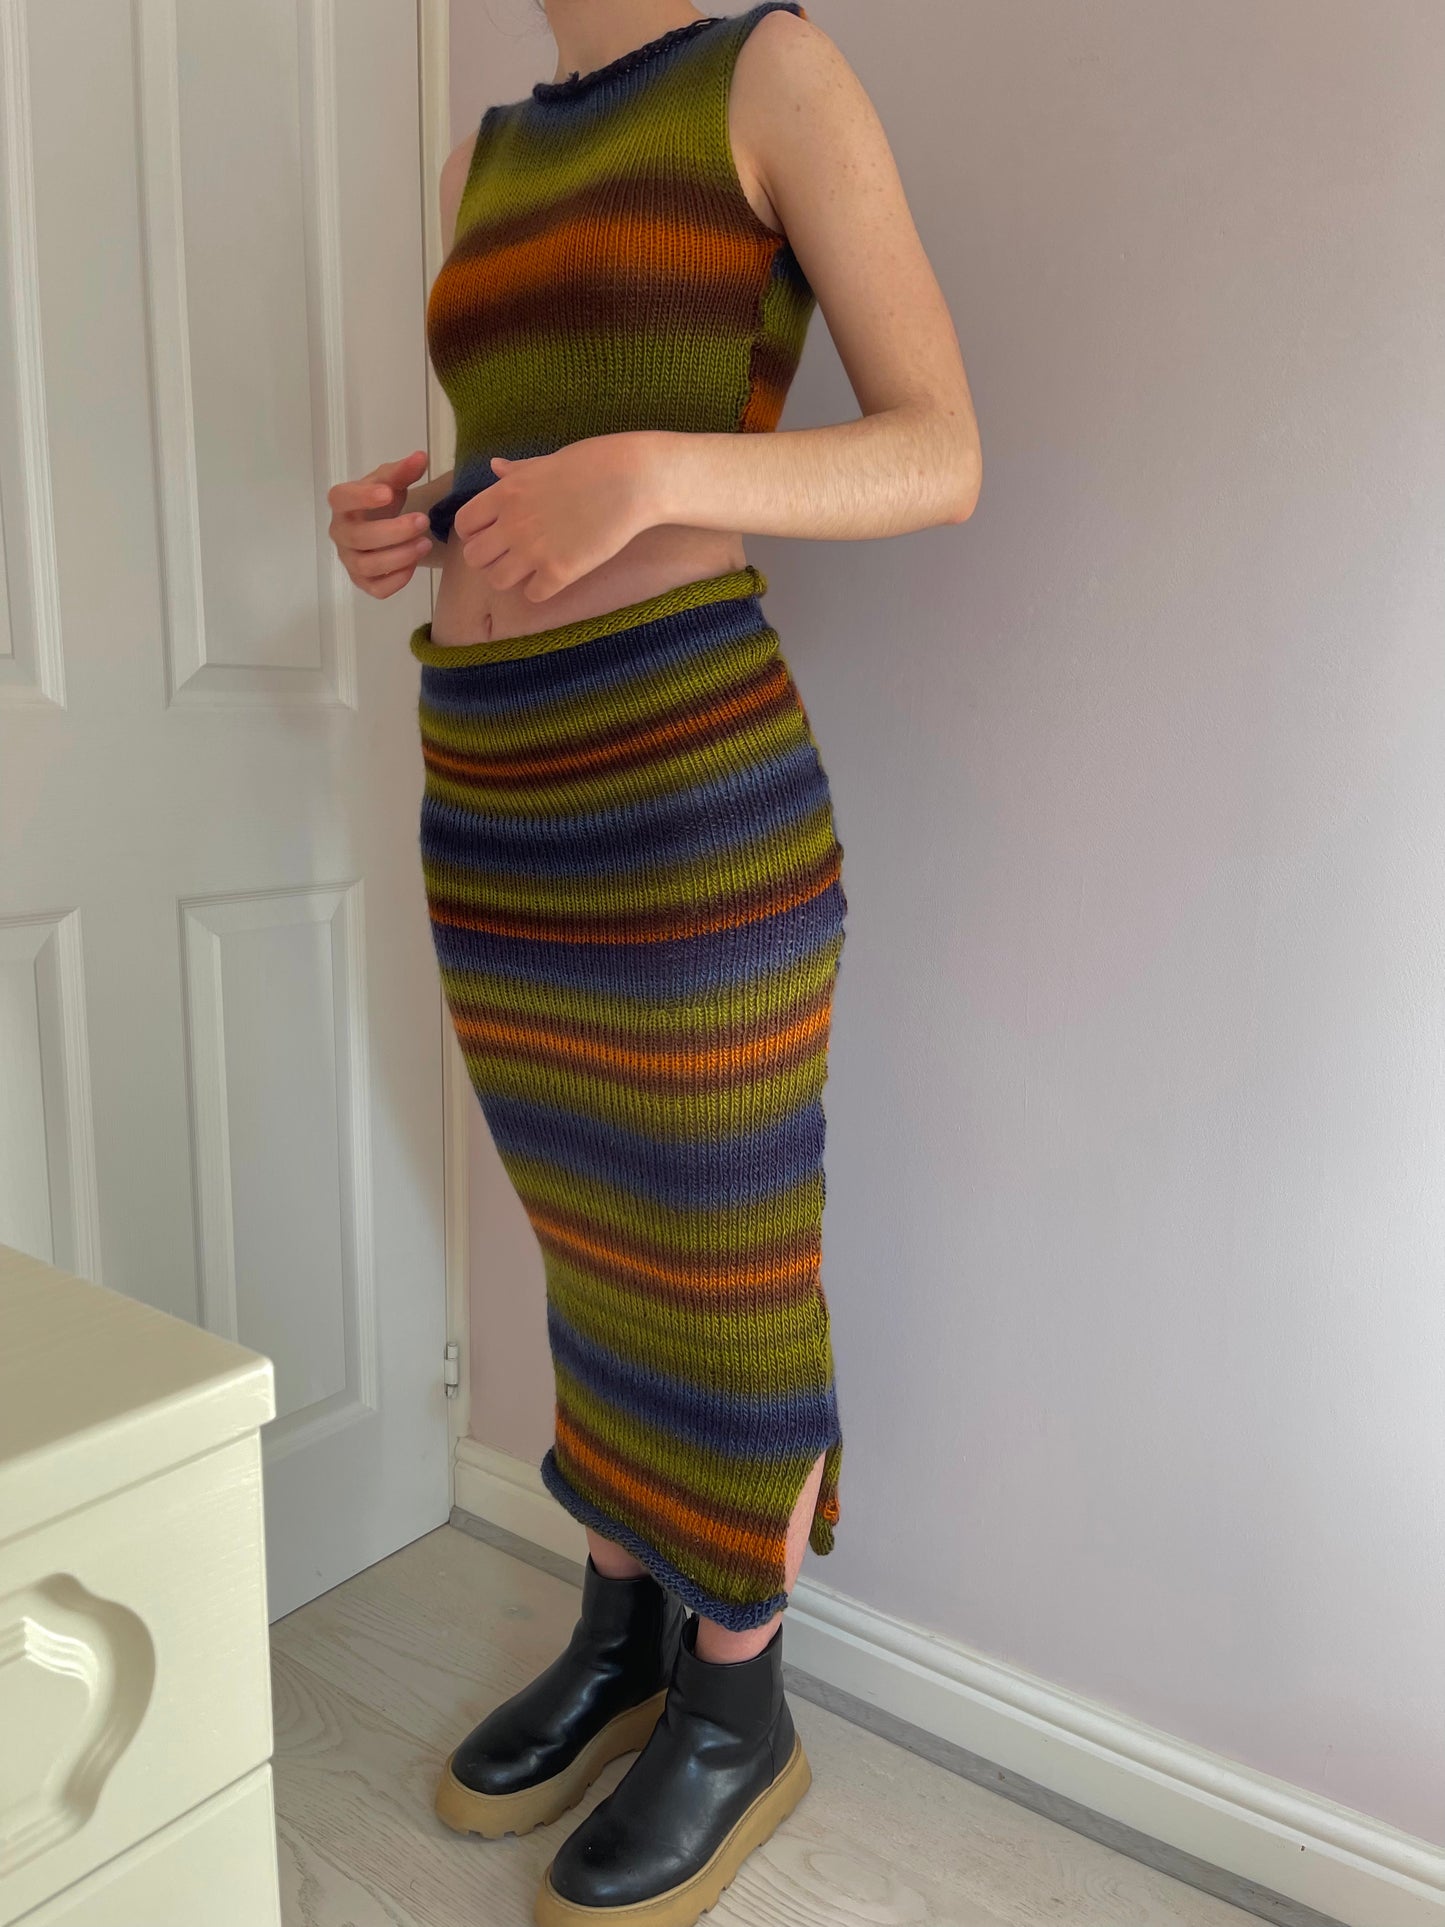 The Aspen Maxi Skirt - handmade knitted ombré maxi skirt with side slit